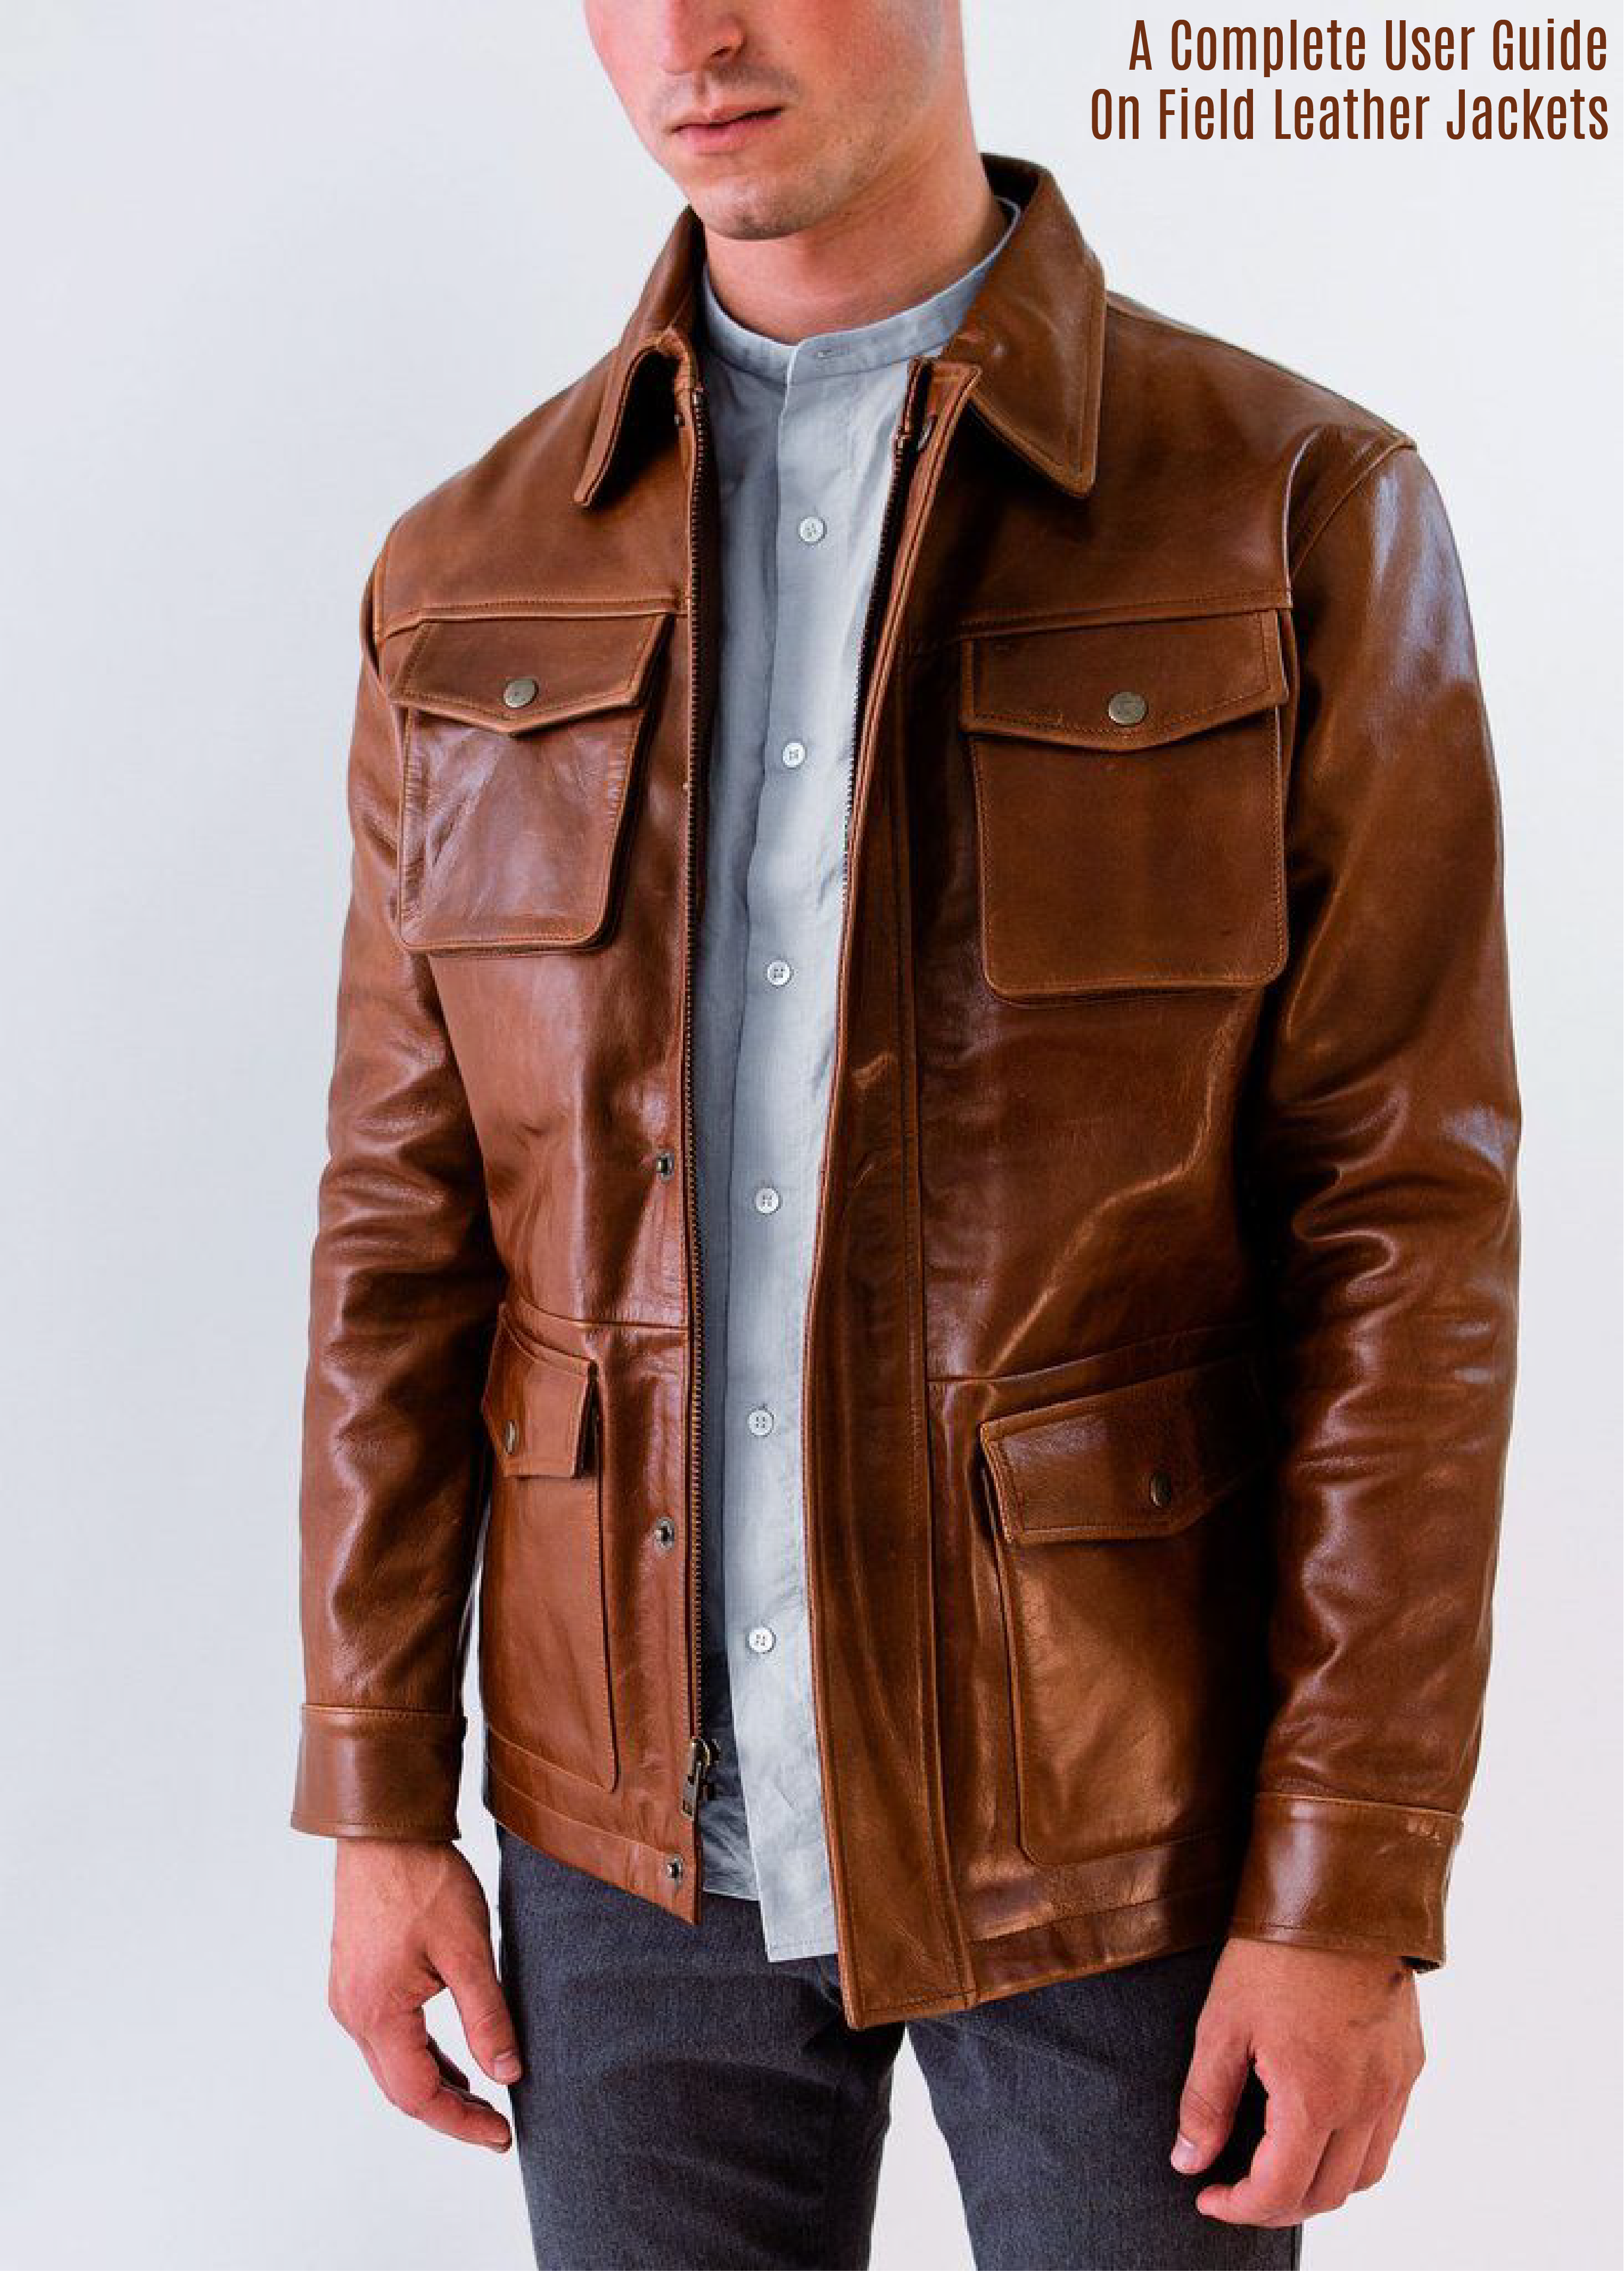 field-leather-jackets